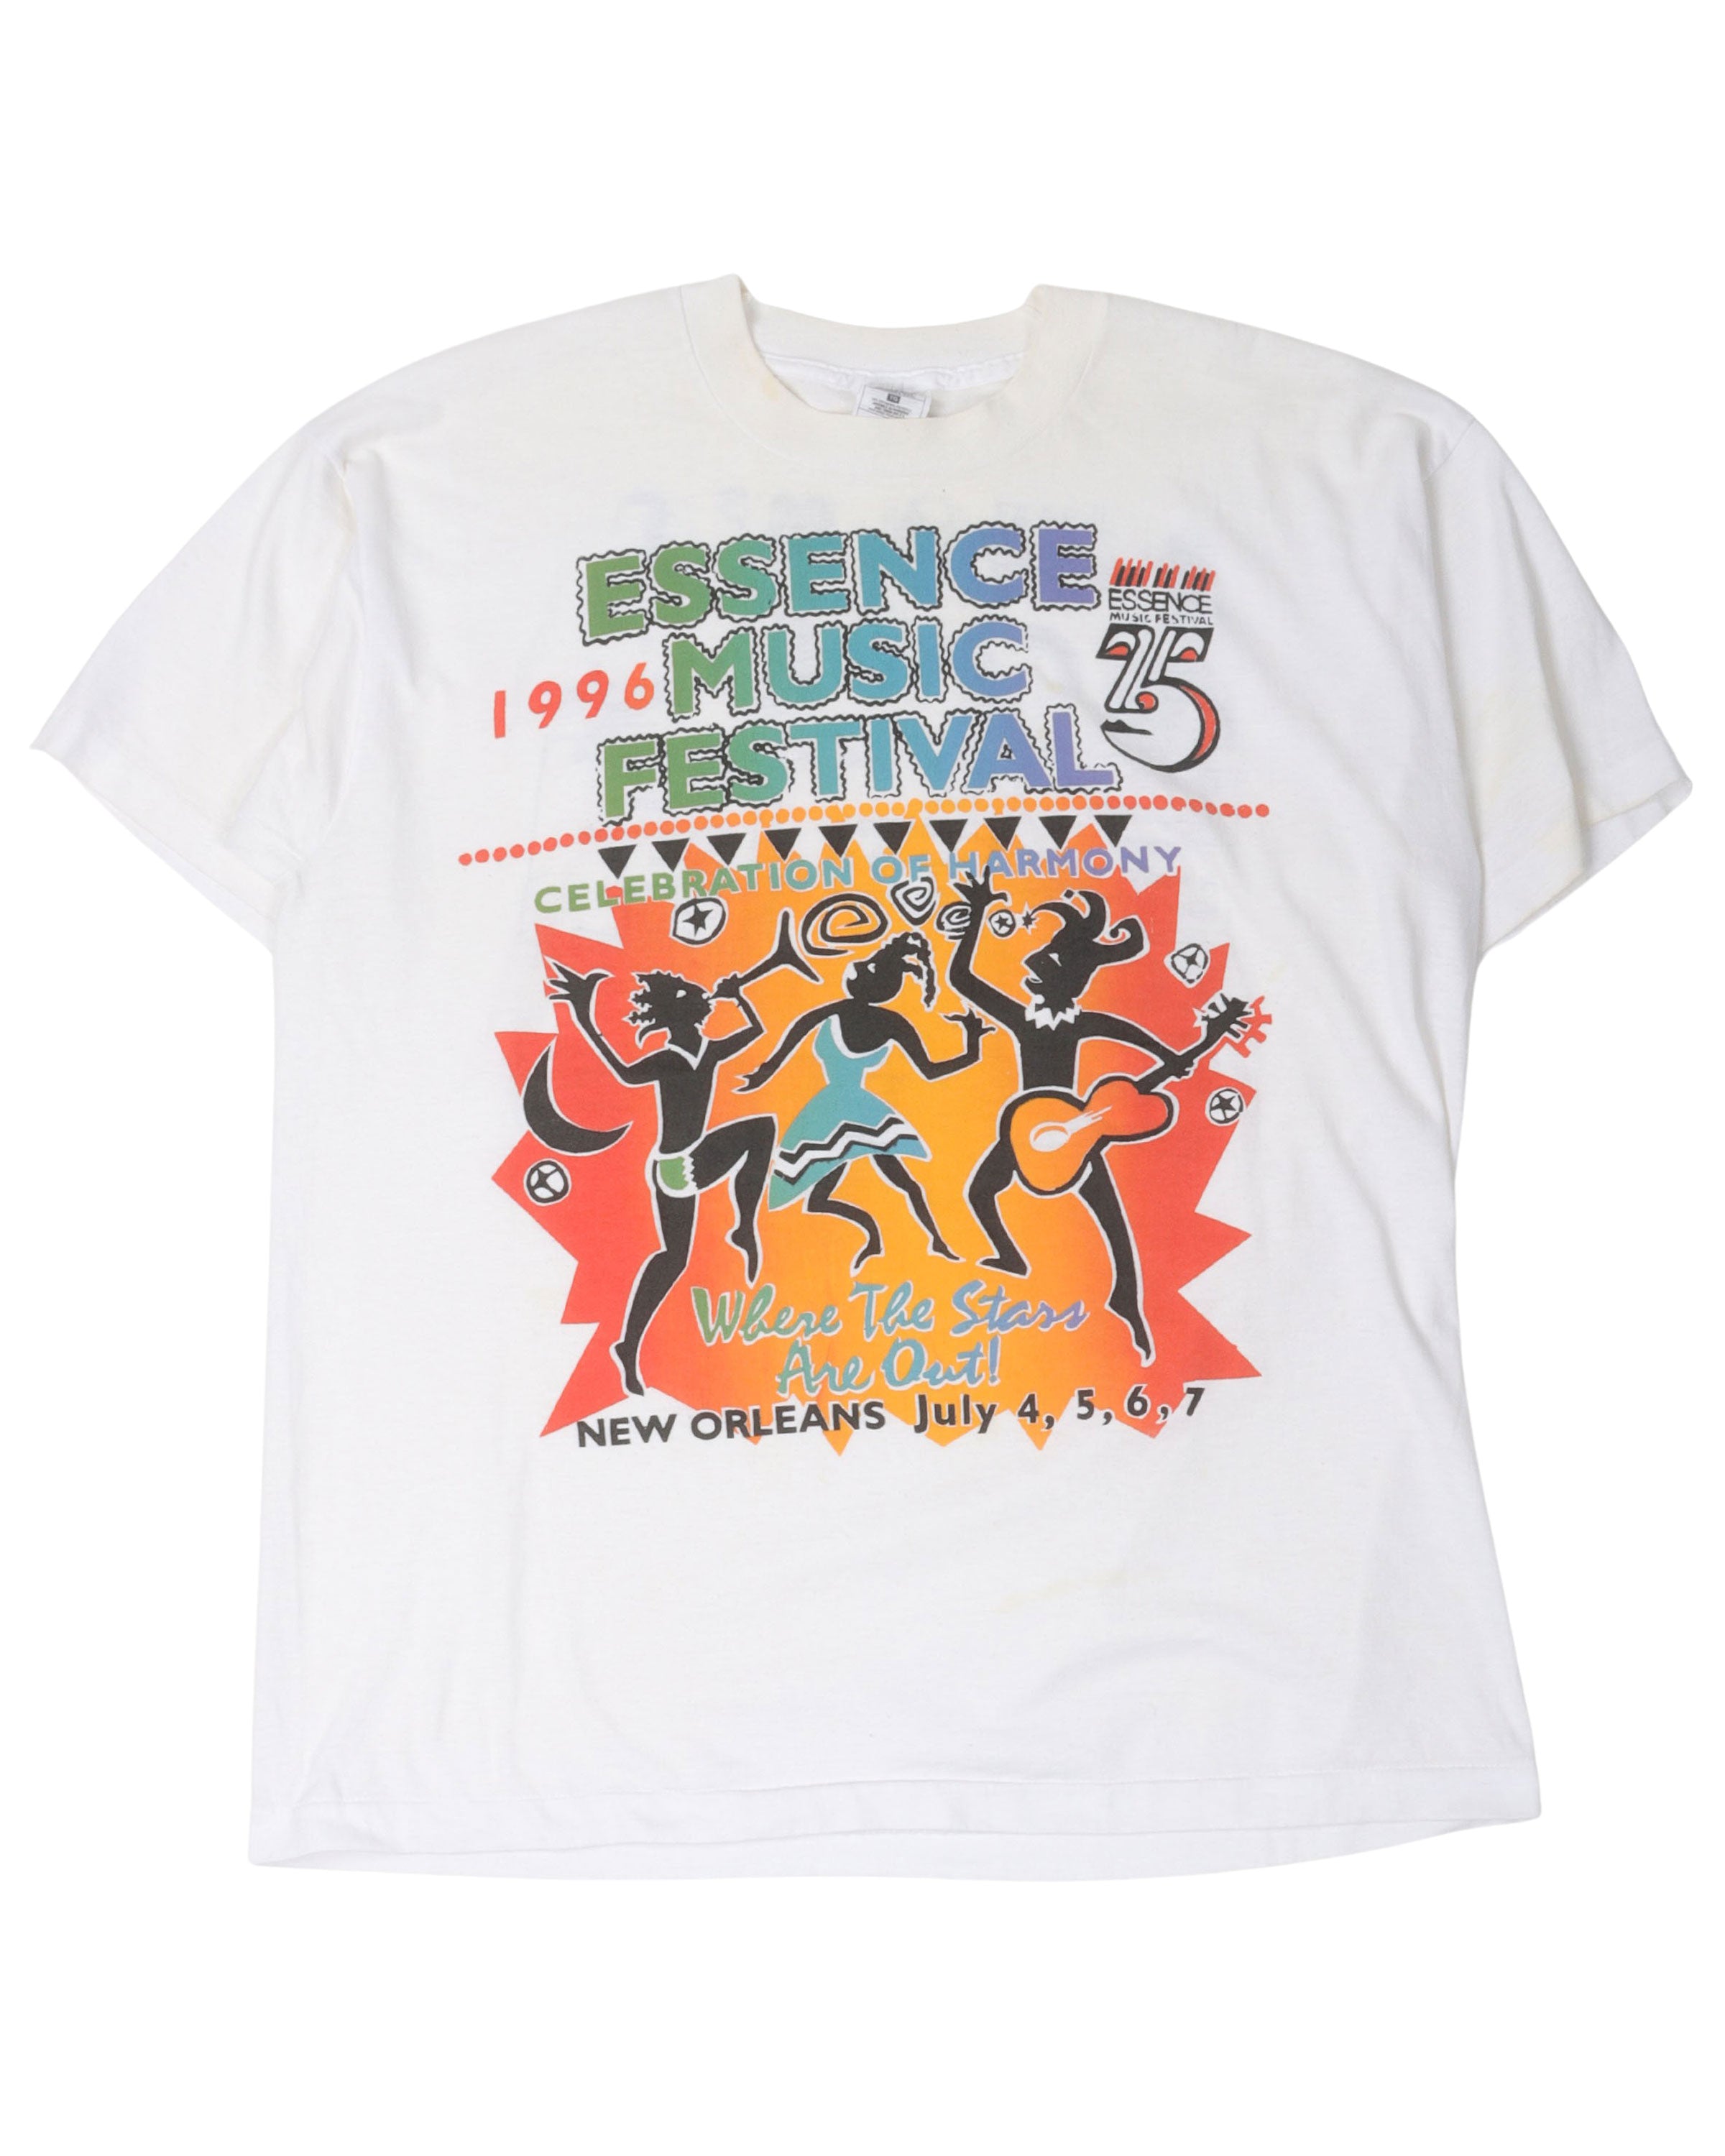 Essence Music Festival 1996 T-Shirt